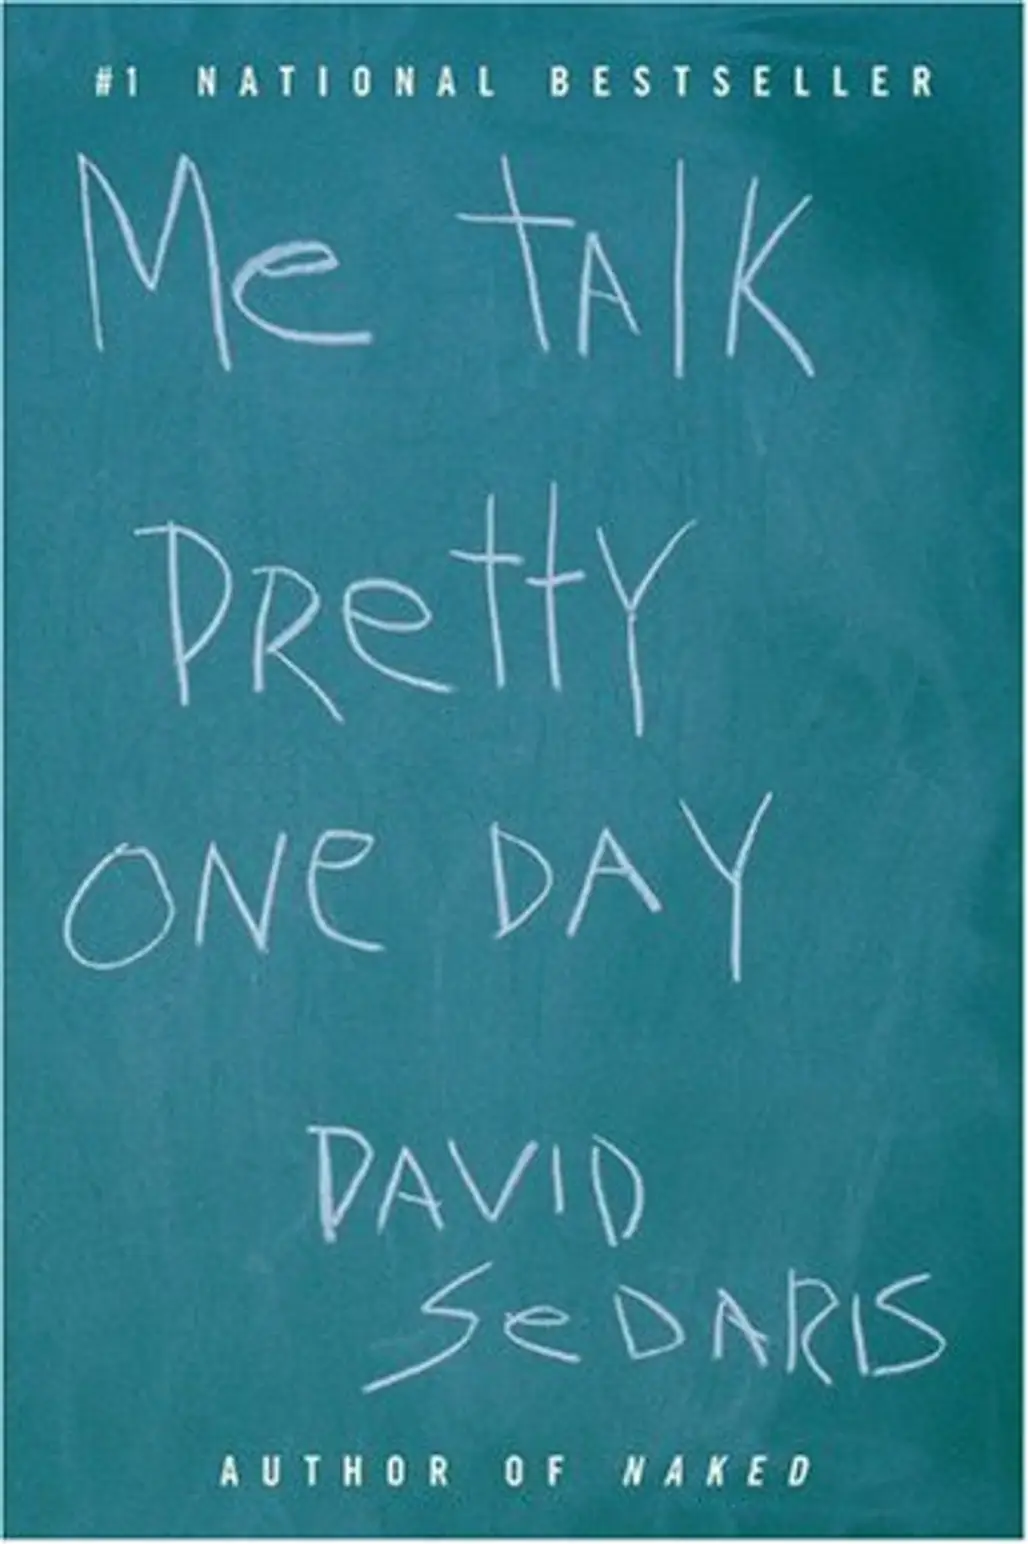 “Me Talk Pretty One Day” by David Sedaris